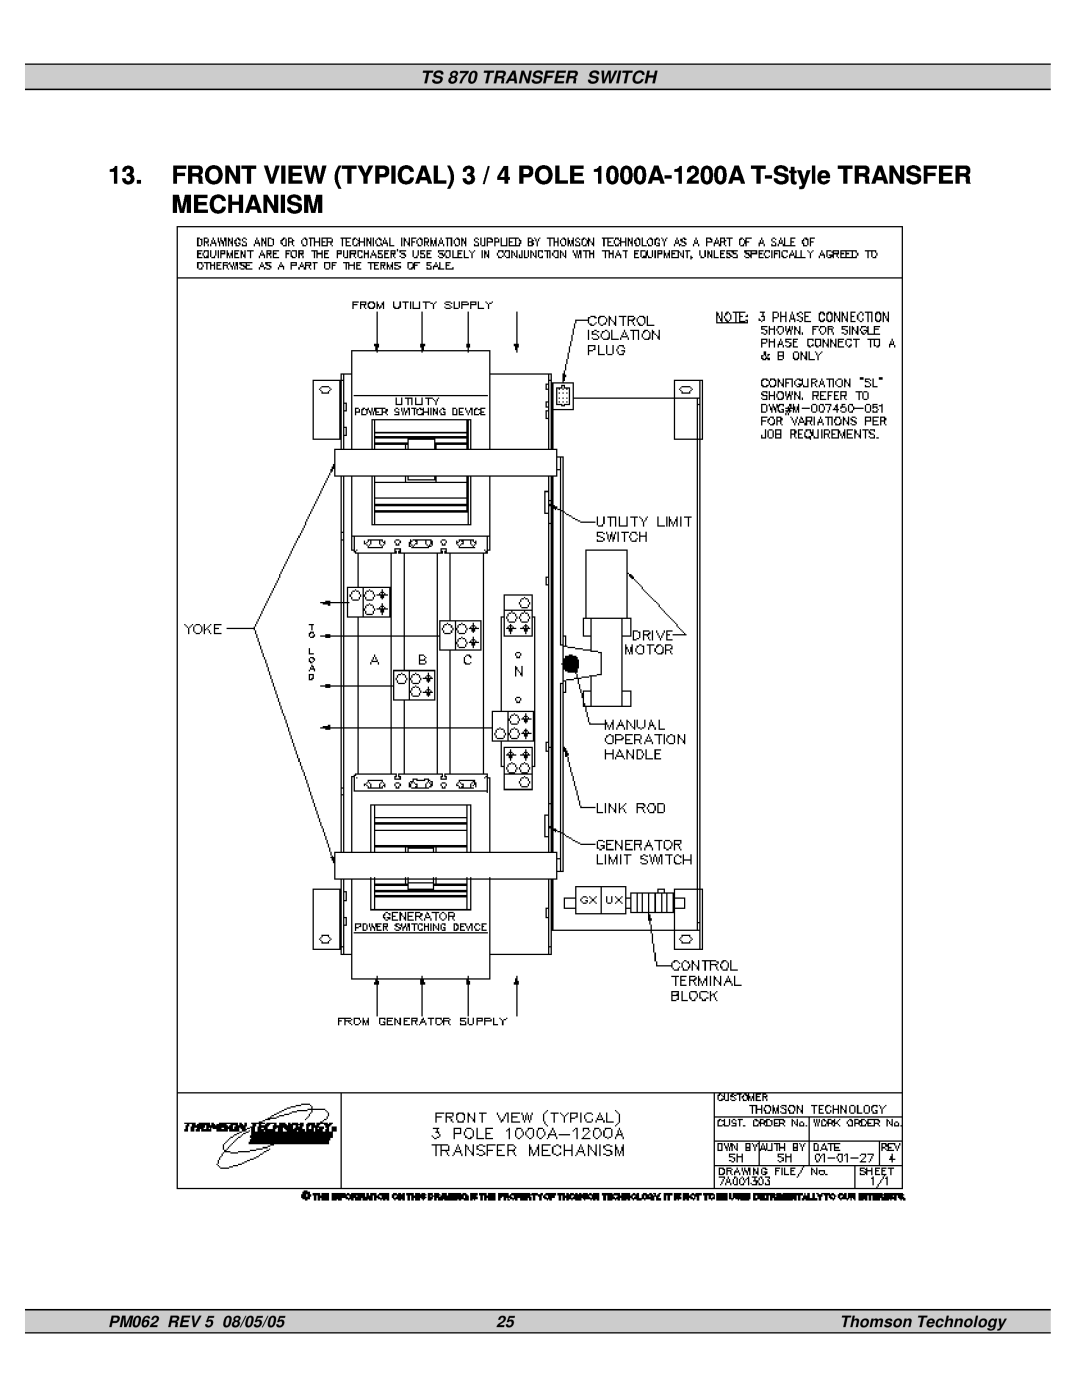 Technicolor - Thomson service manual TS 870 TRANSFER SWITCH, PM062 REV 5 08/05/05, Thomson Technology 